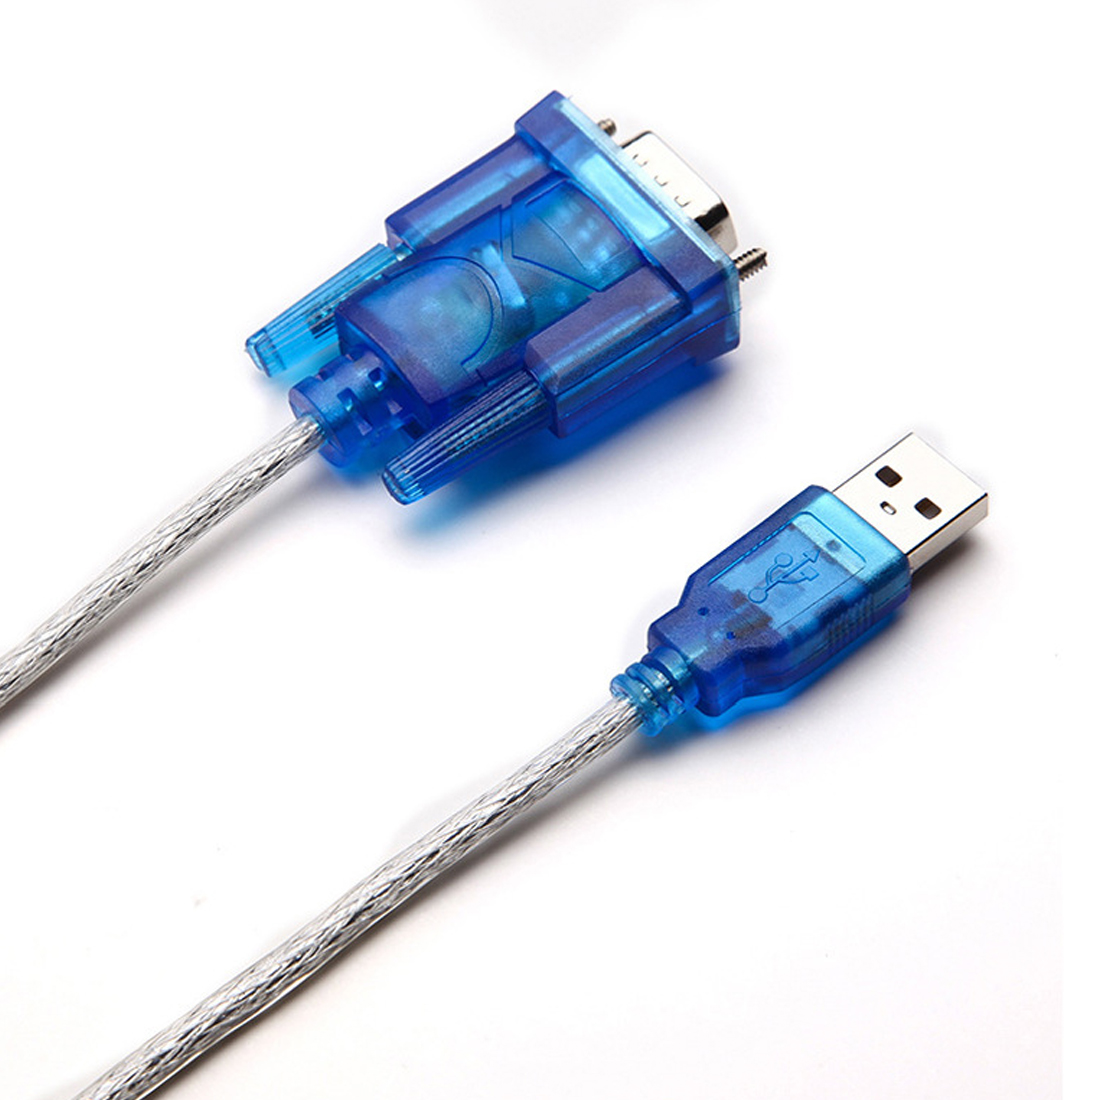 80cm USB 2.0 auf COM Port (RS232) Seriell DB9 9 Pin Adapter Kabel